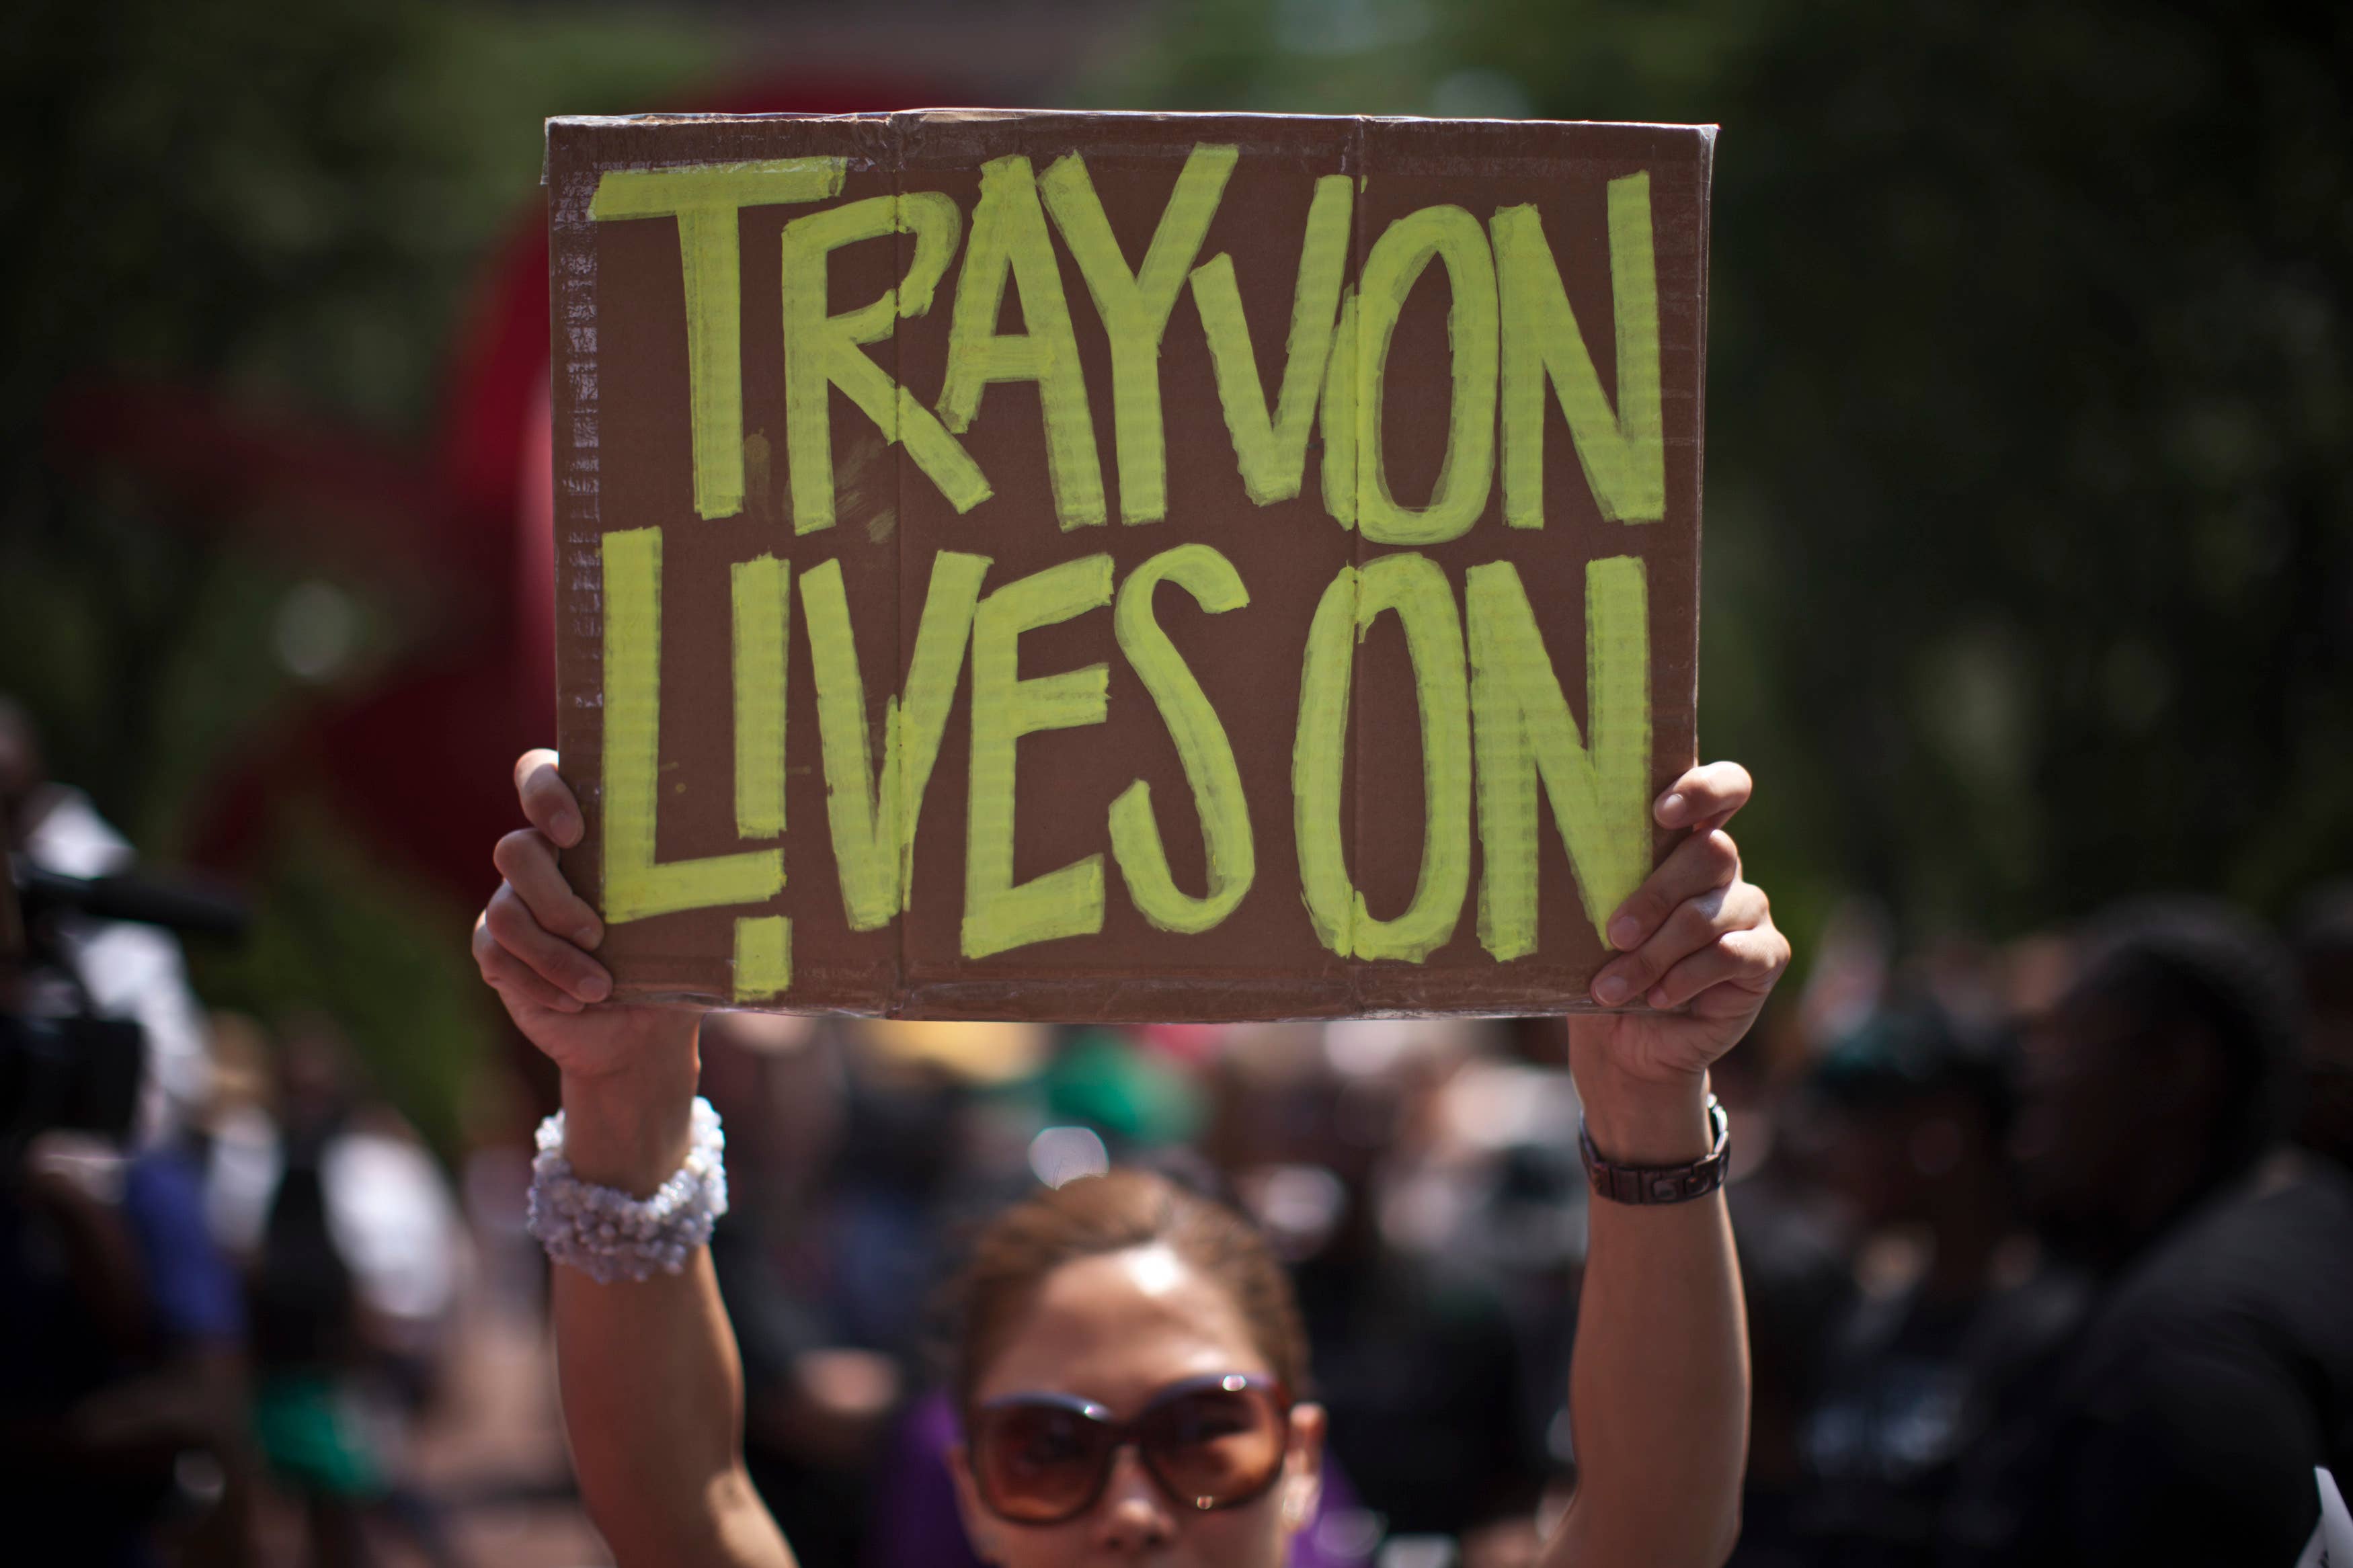 trayvon lives on